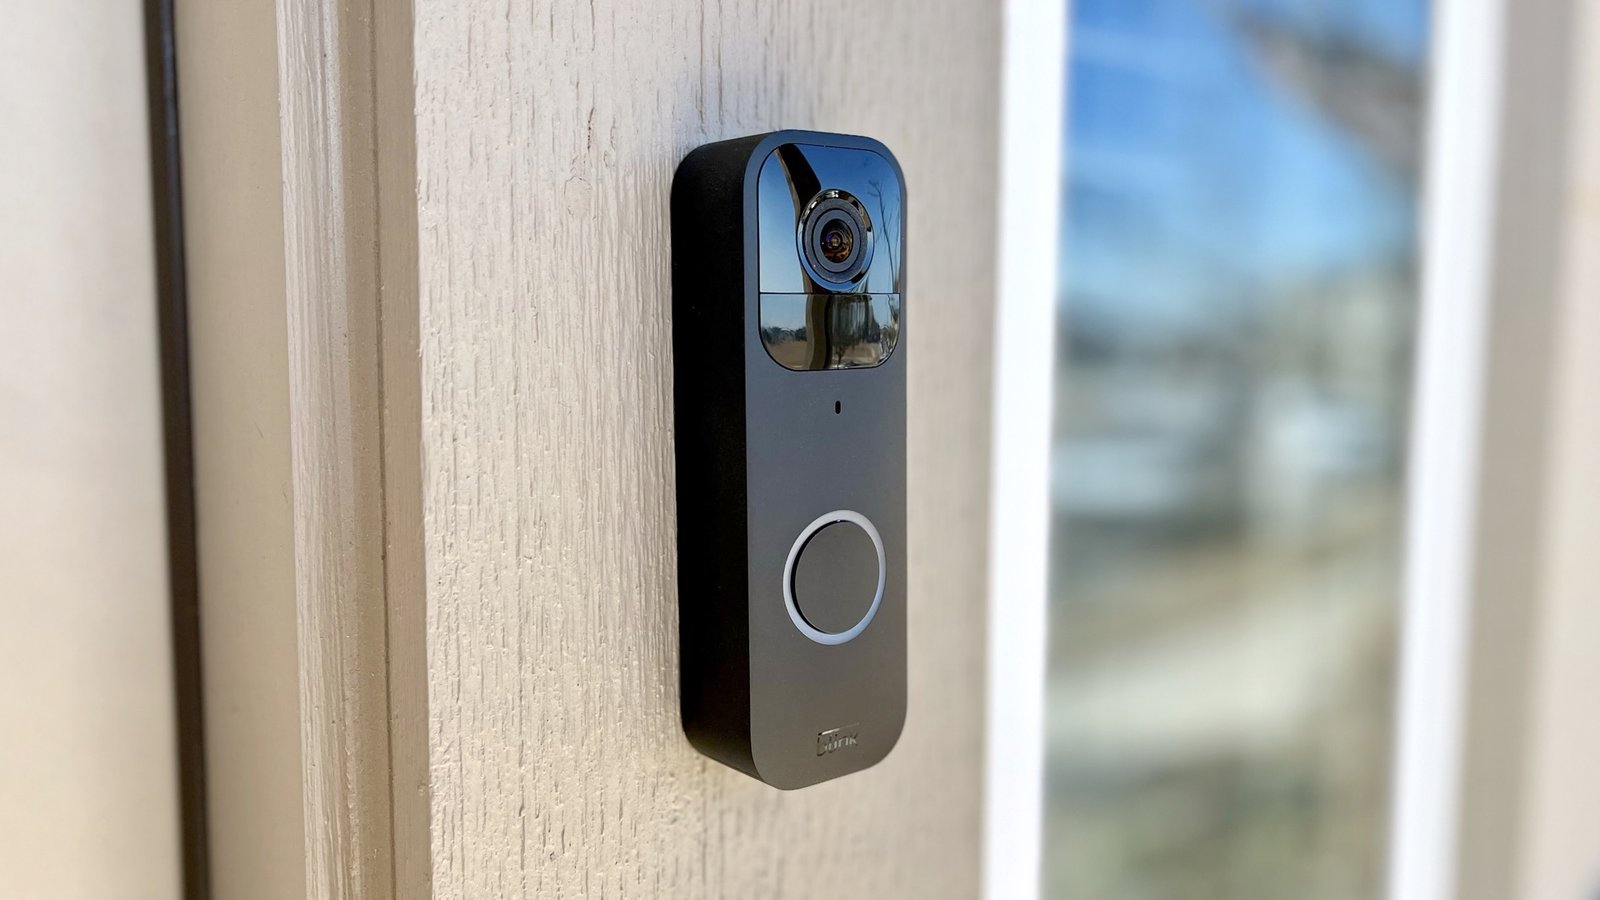 The Blink Video Doorbell mounted on a doorframe